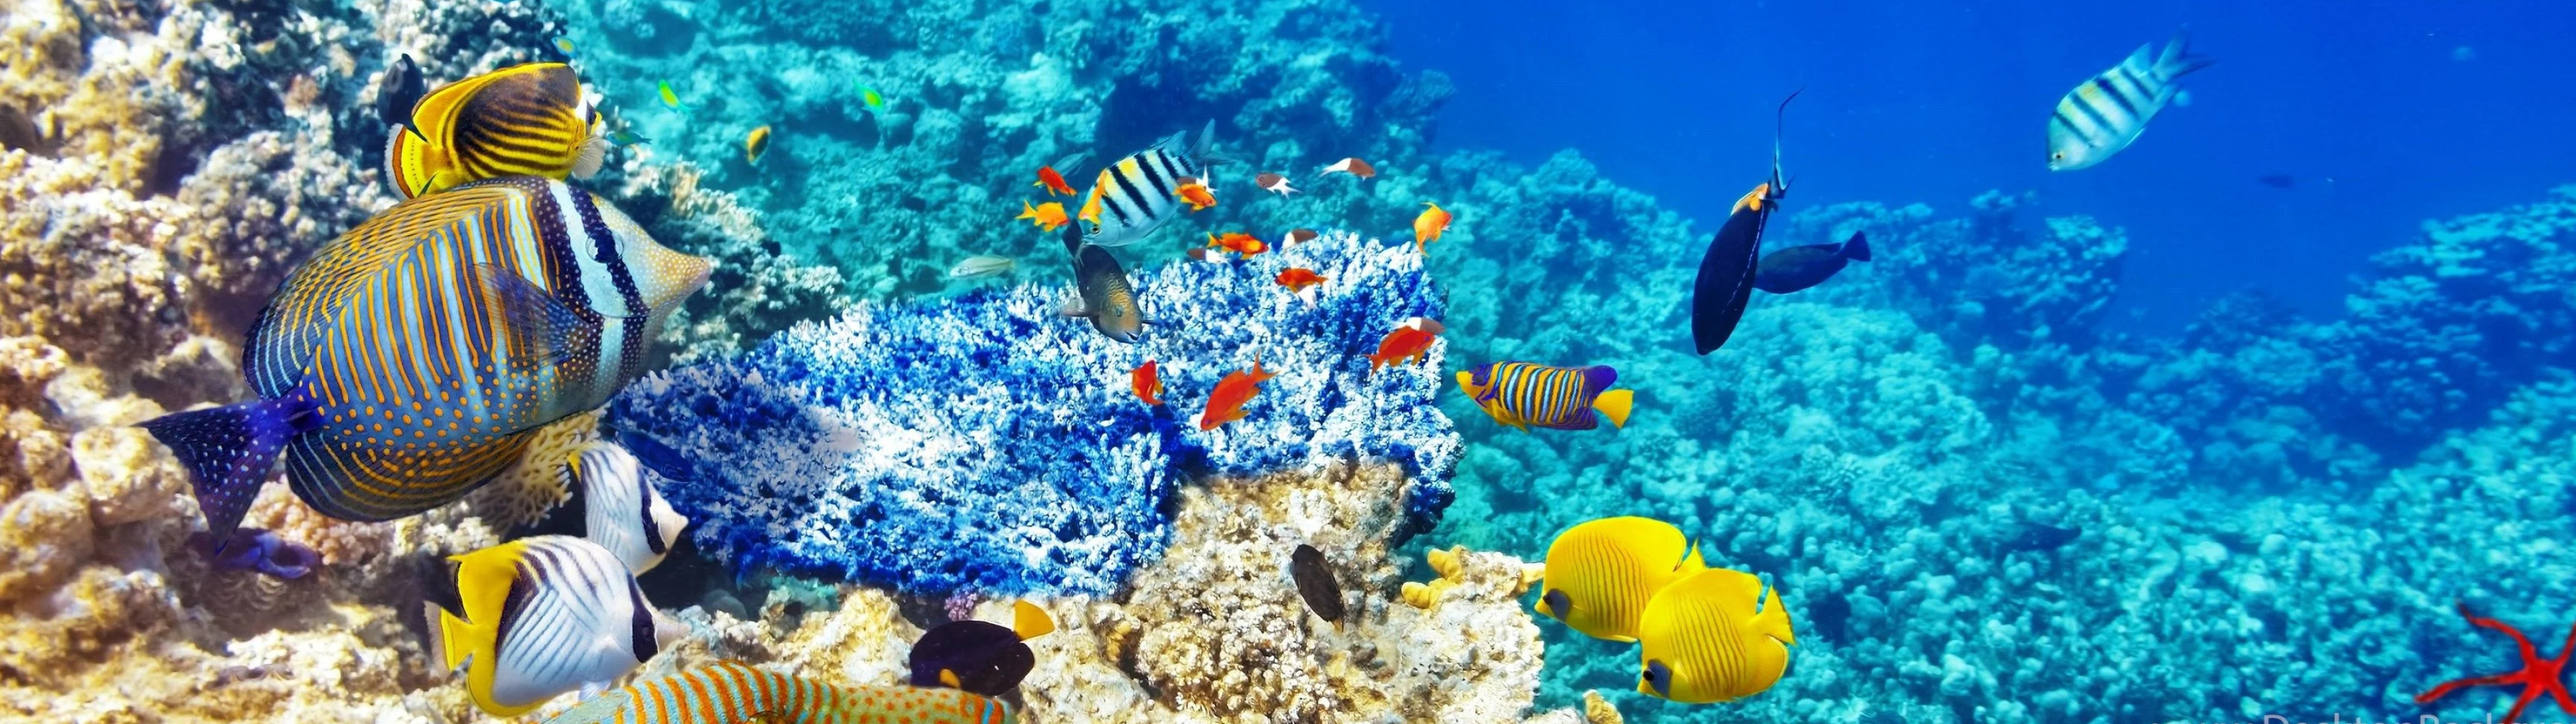 Dual screen setup, Colorful fish, Underwater splendor, Exquisite marine fauna, 3840x1080 Dual Screen Desktop